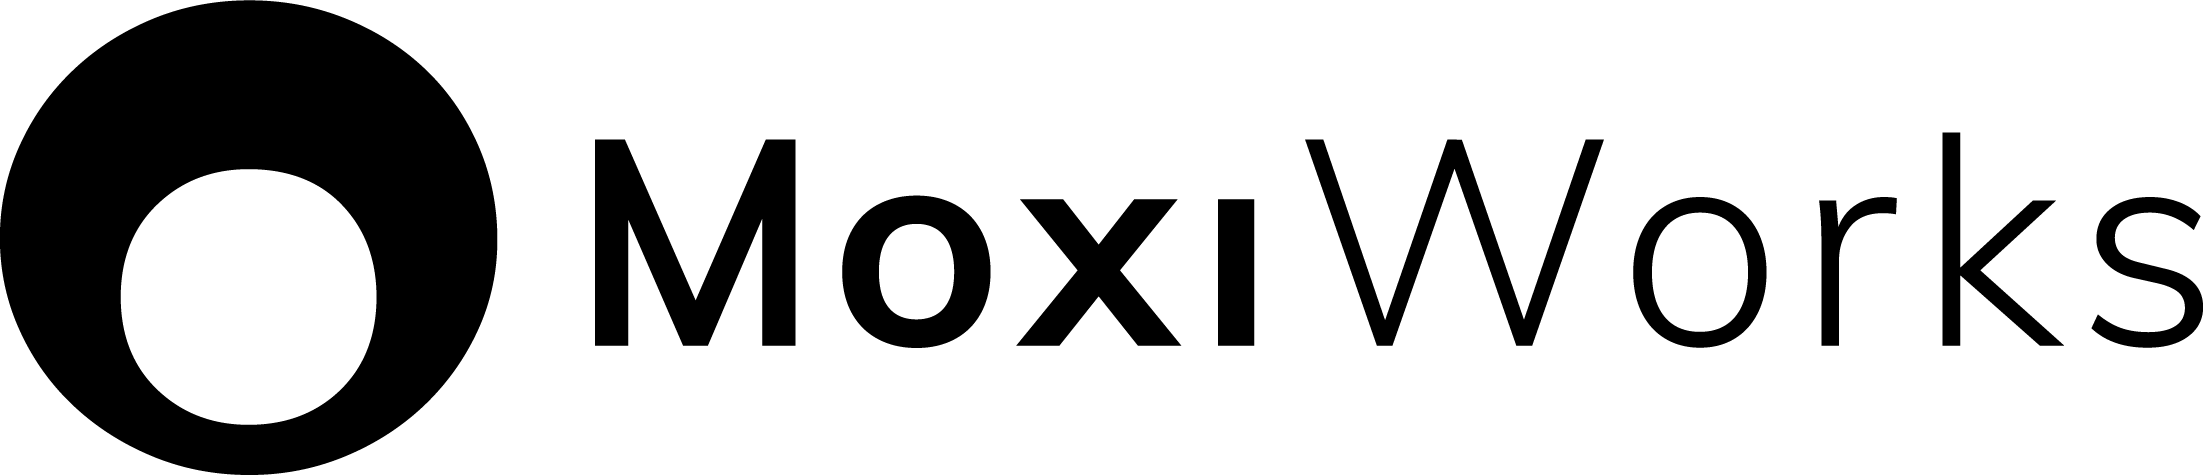 MoxiWorks Logo Black